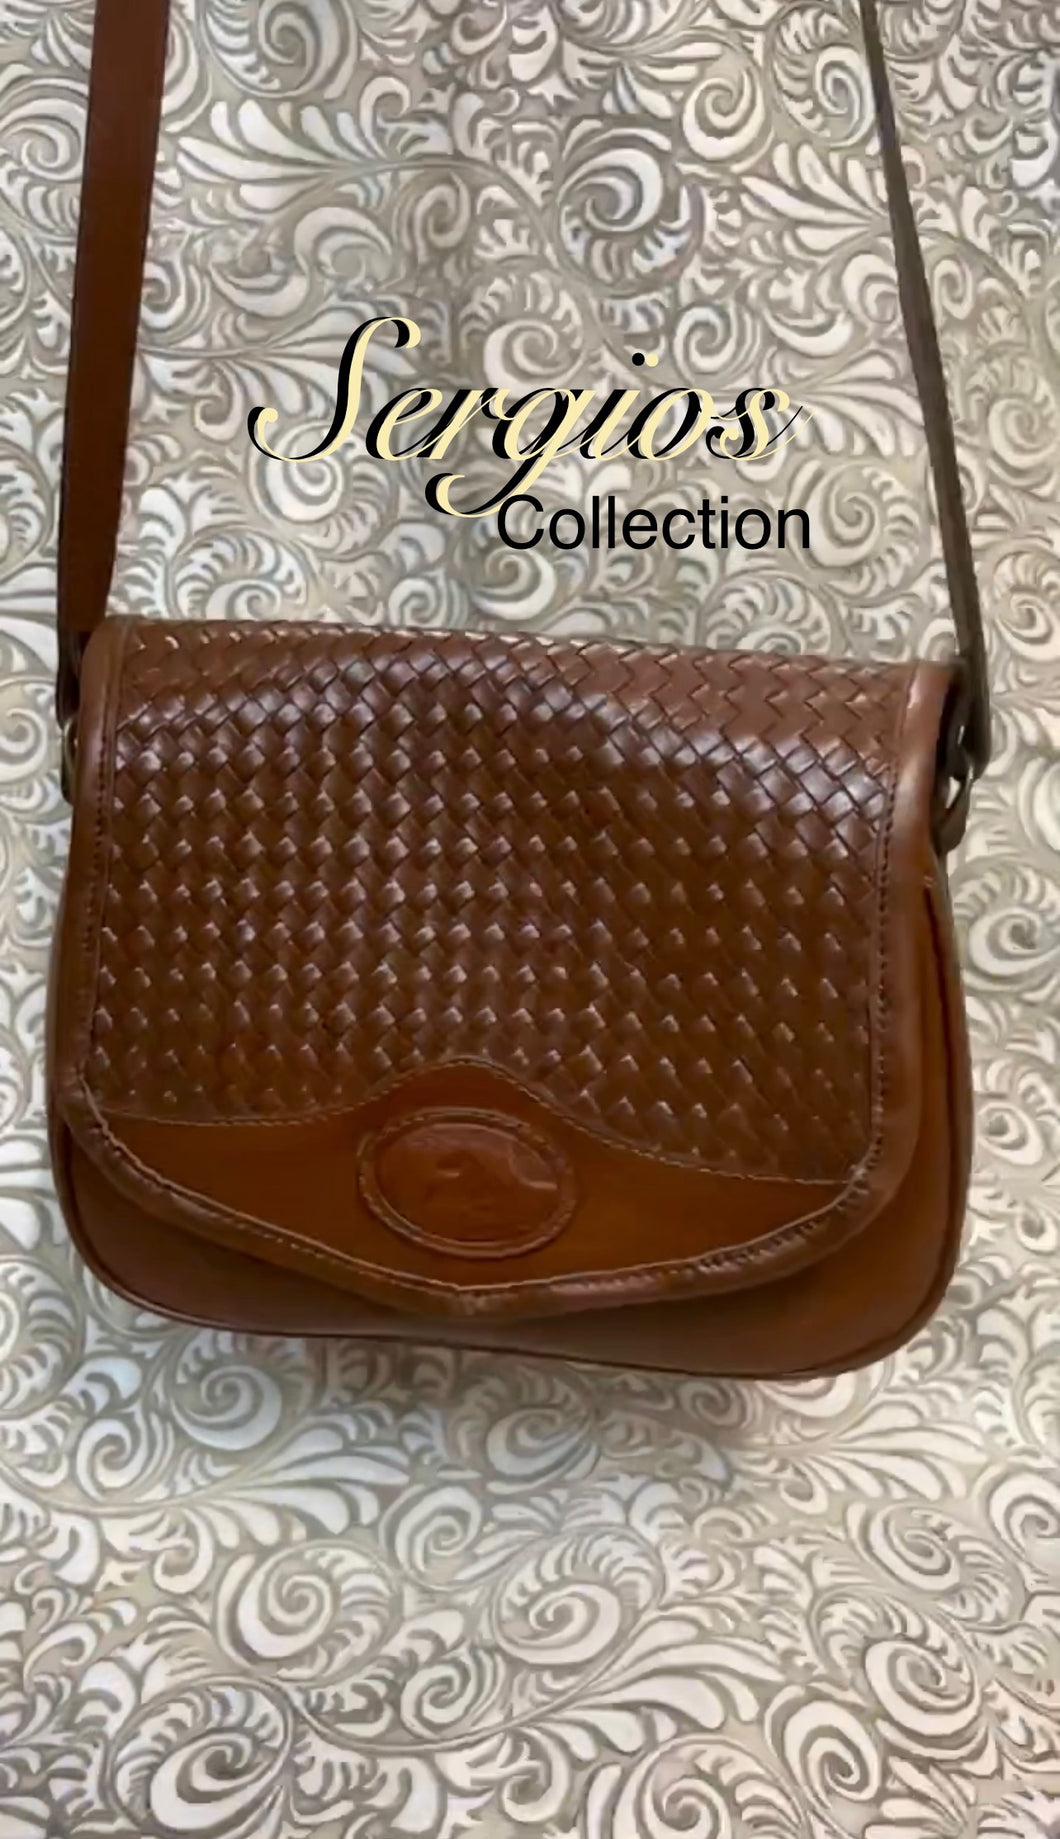 Santa Bárbara Saddle style bag with basket weave look leather